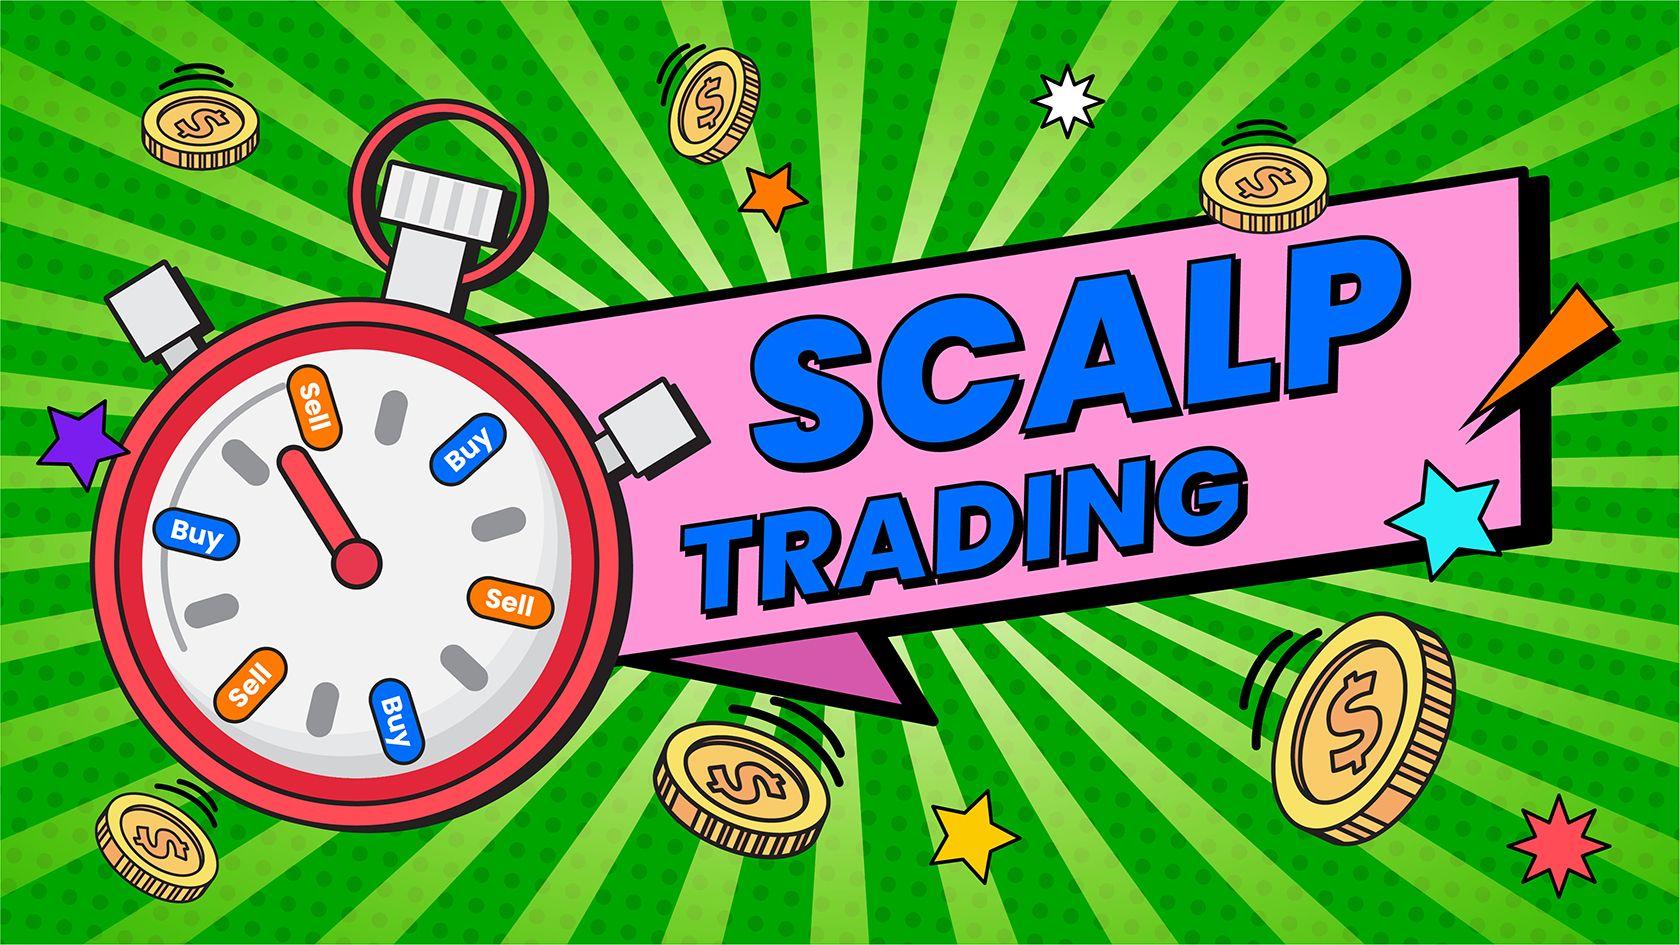 Scalp-Trading-3GfKG.jpg